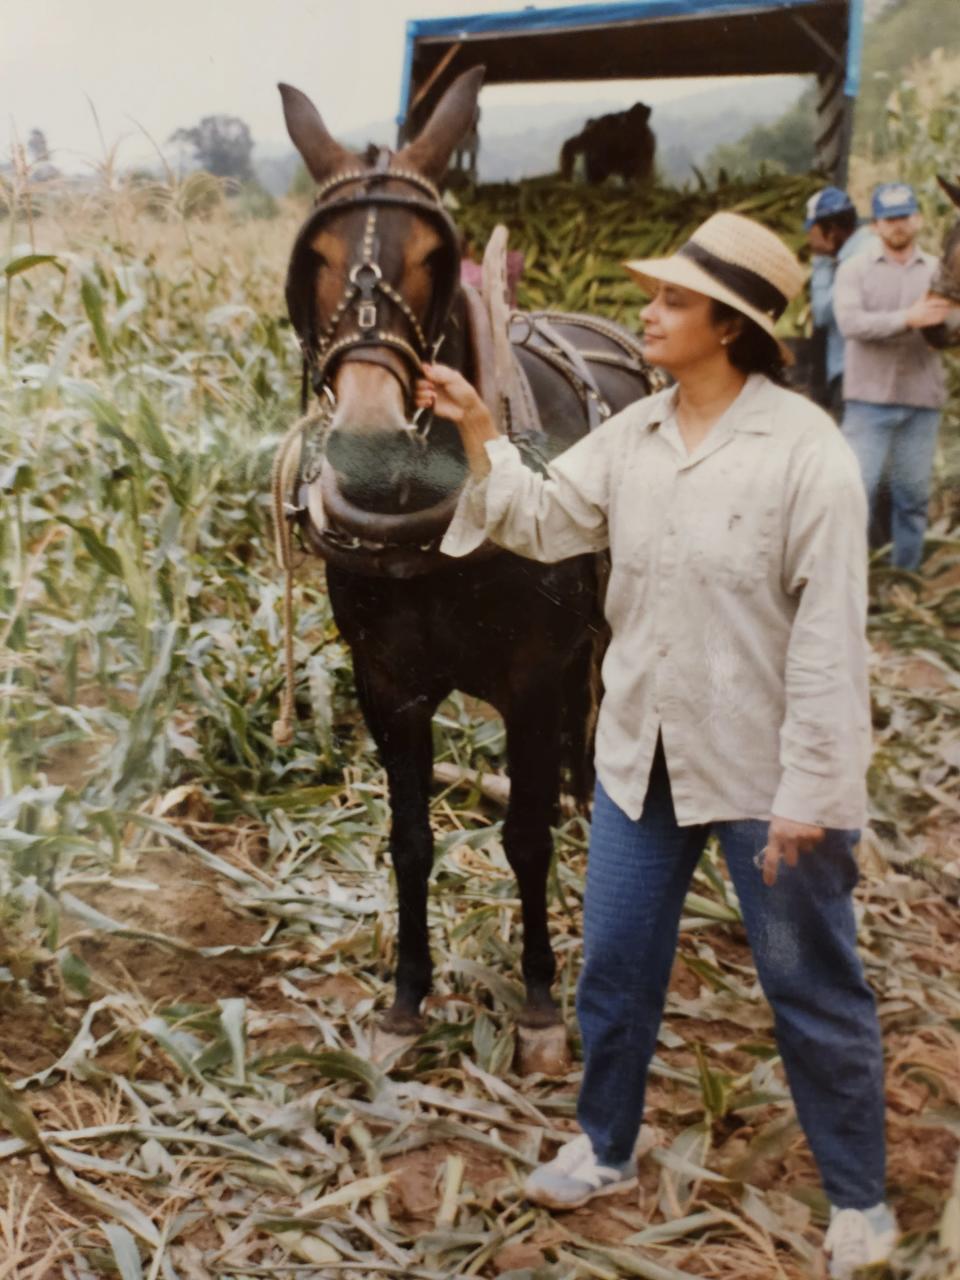 Julia working in the Hopper family cornfield.